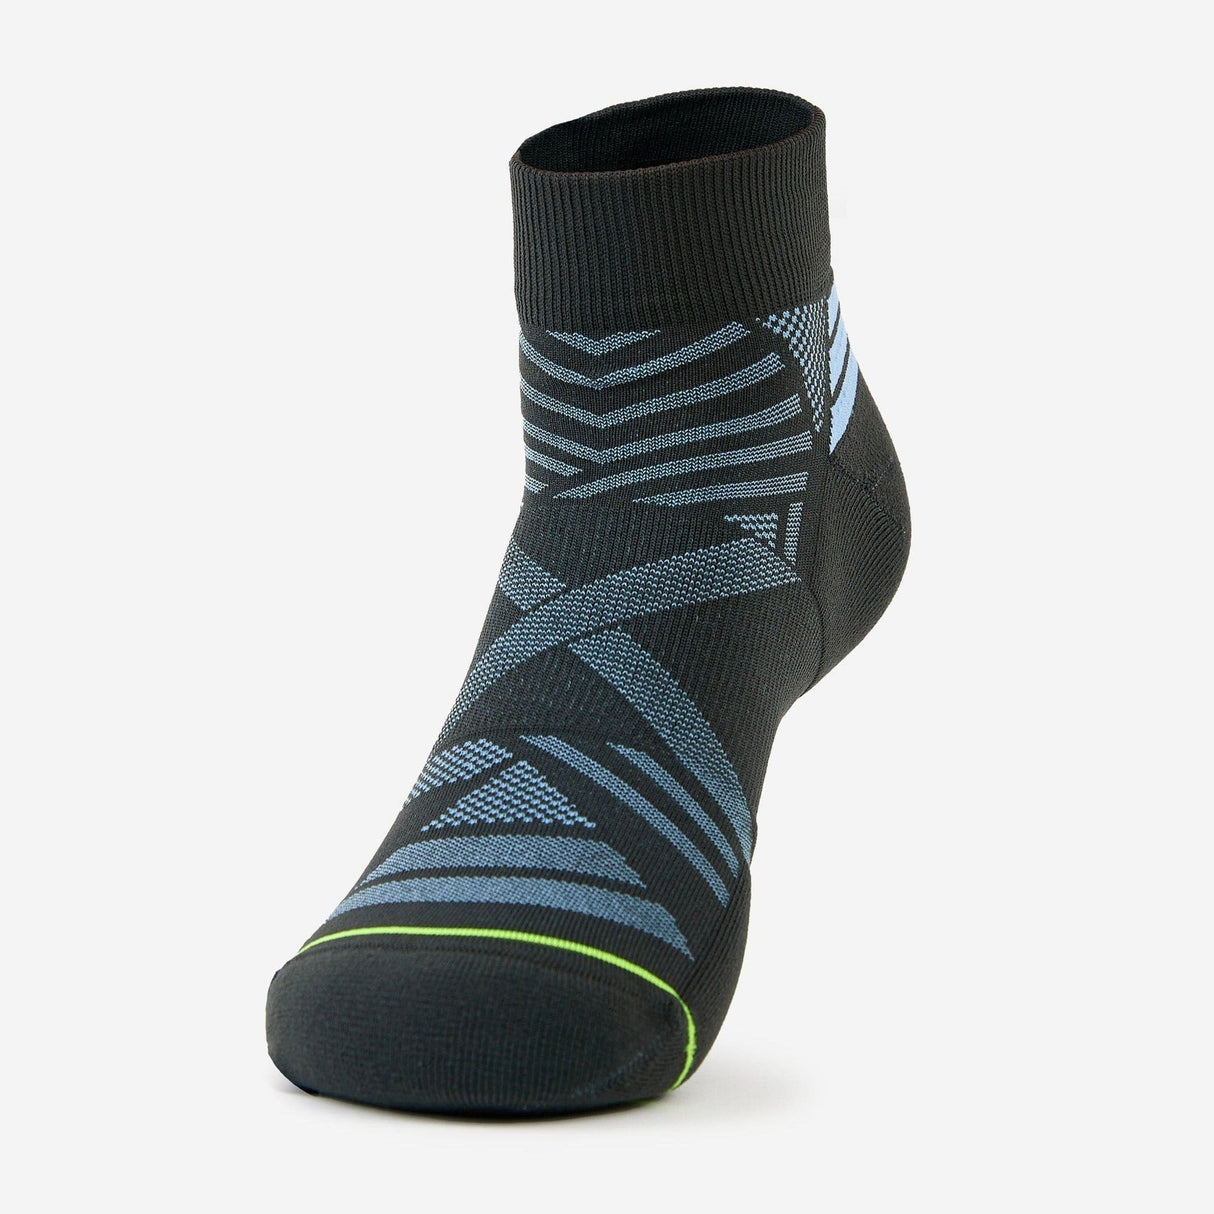 Thorlo Experia X Speed Performance Cushion Ankle Socks  -  Medium / Charcoal